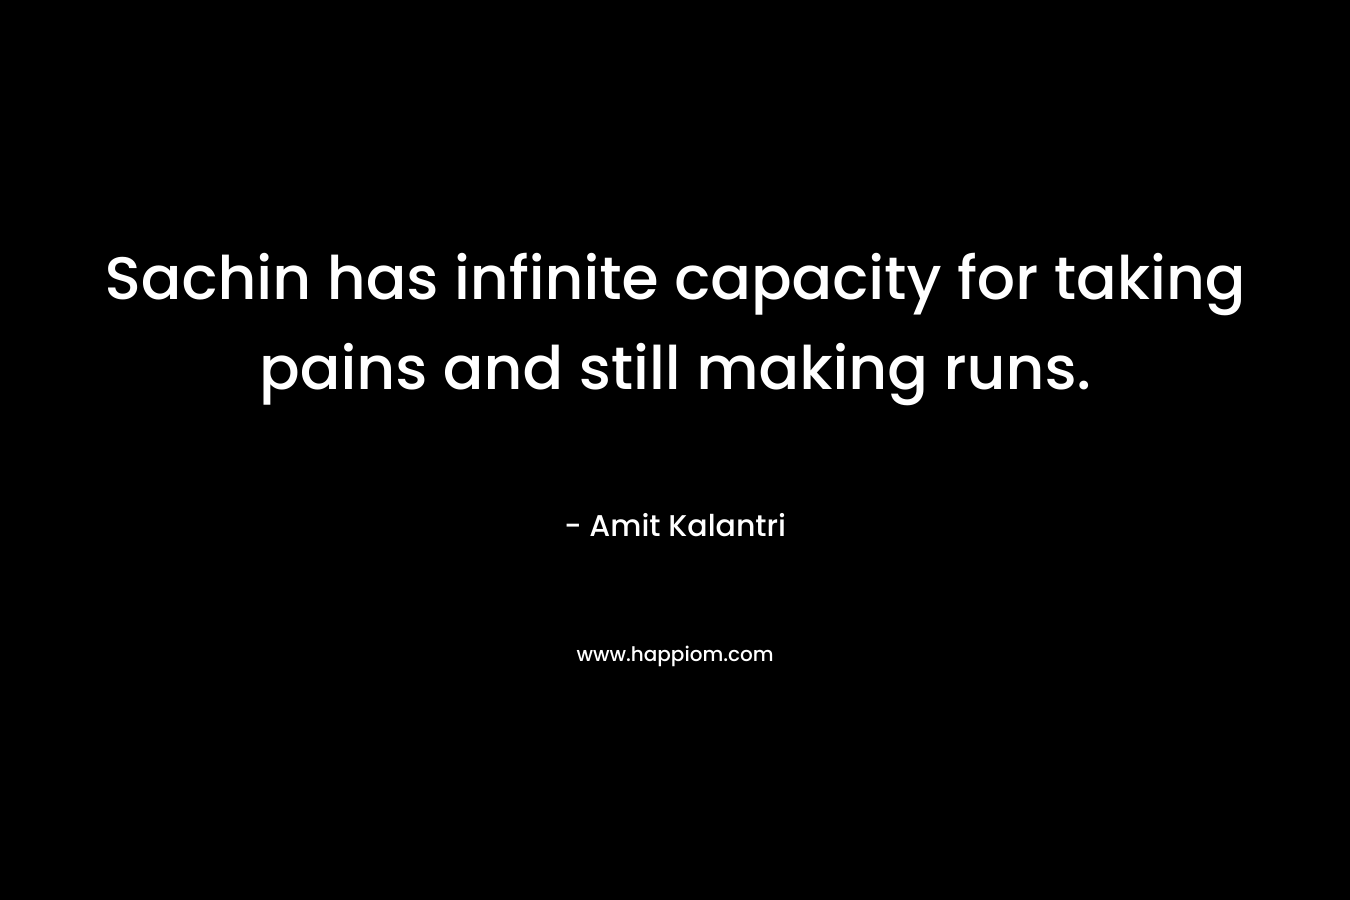 Sachin has infinite capacity for taking pains and still making runs.